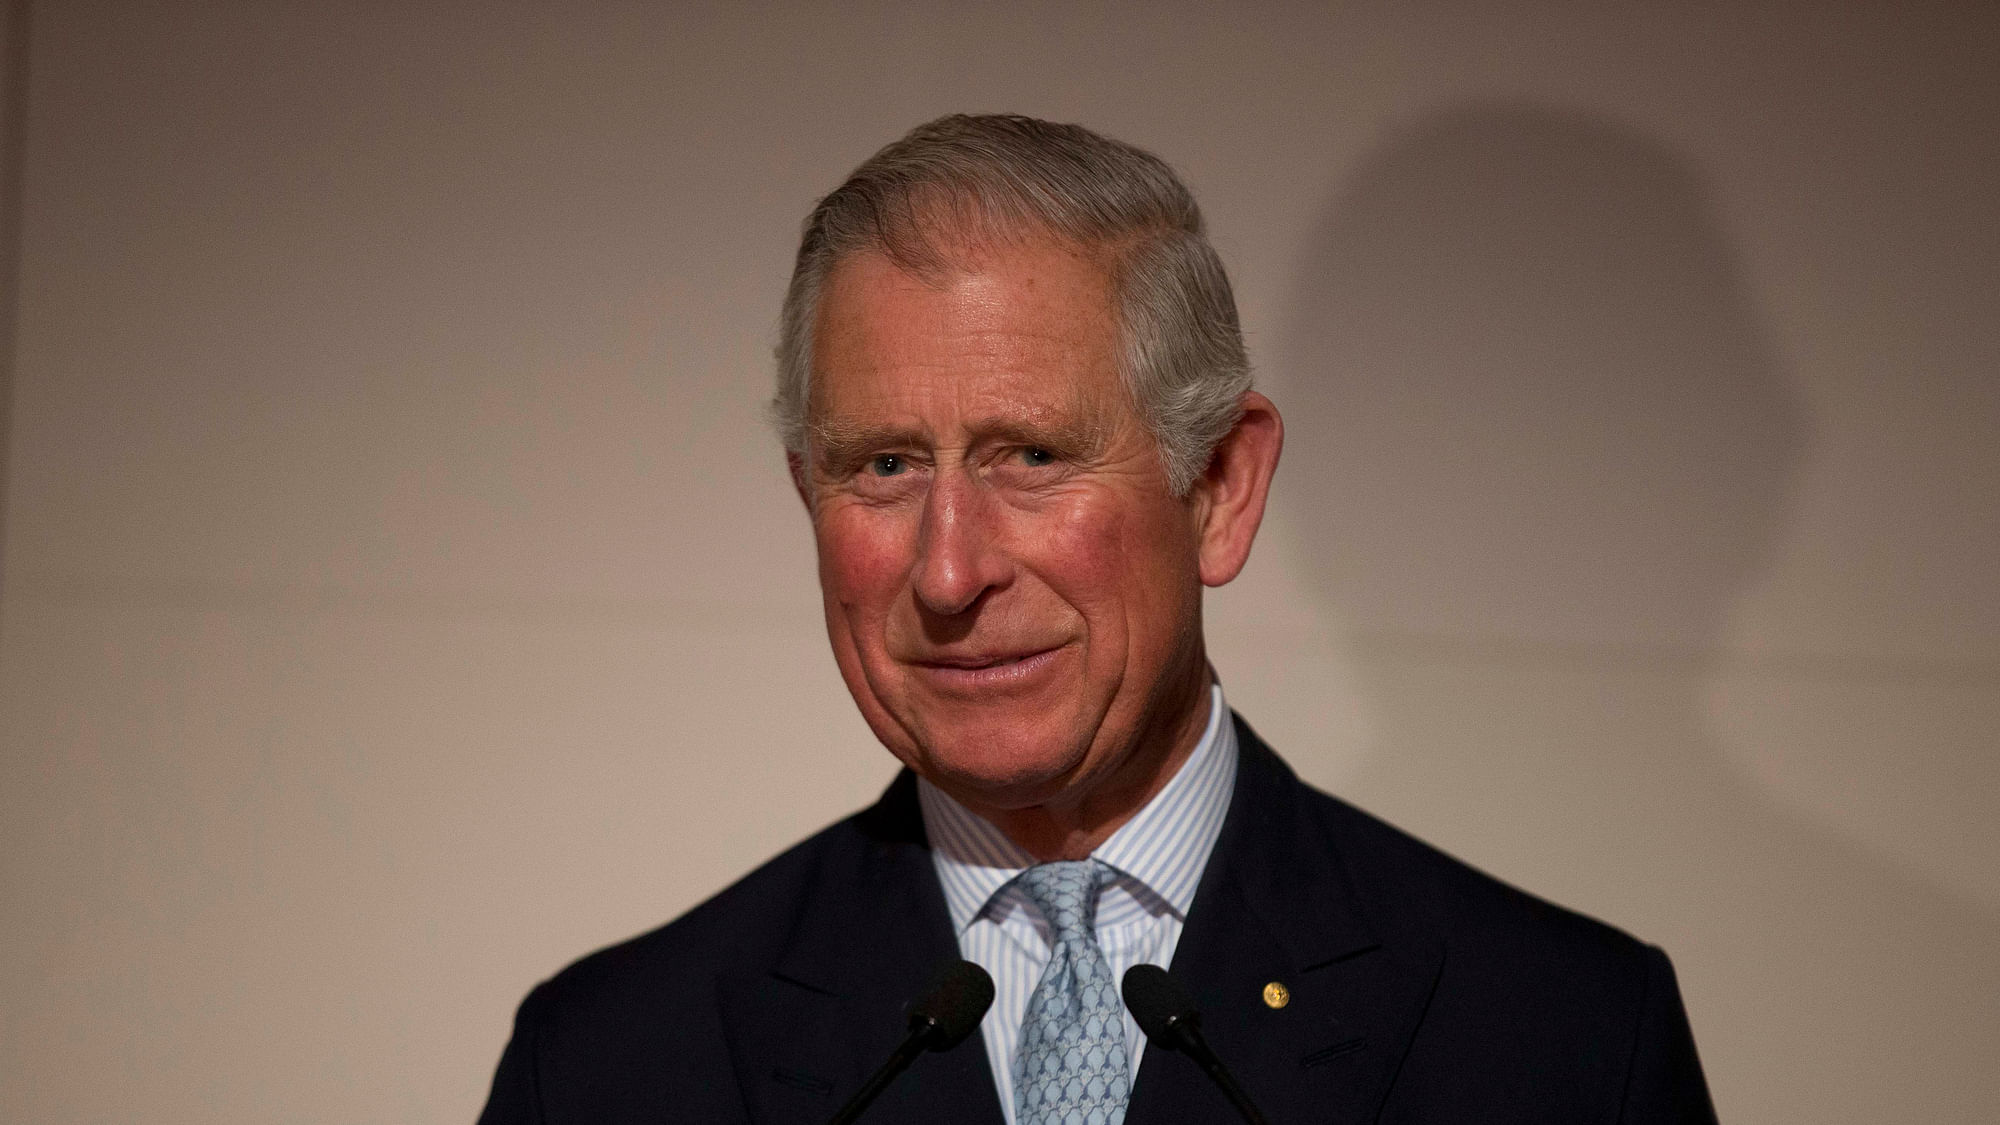 File photo of Prince Charles.